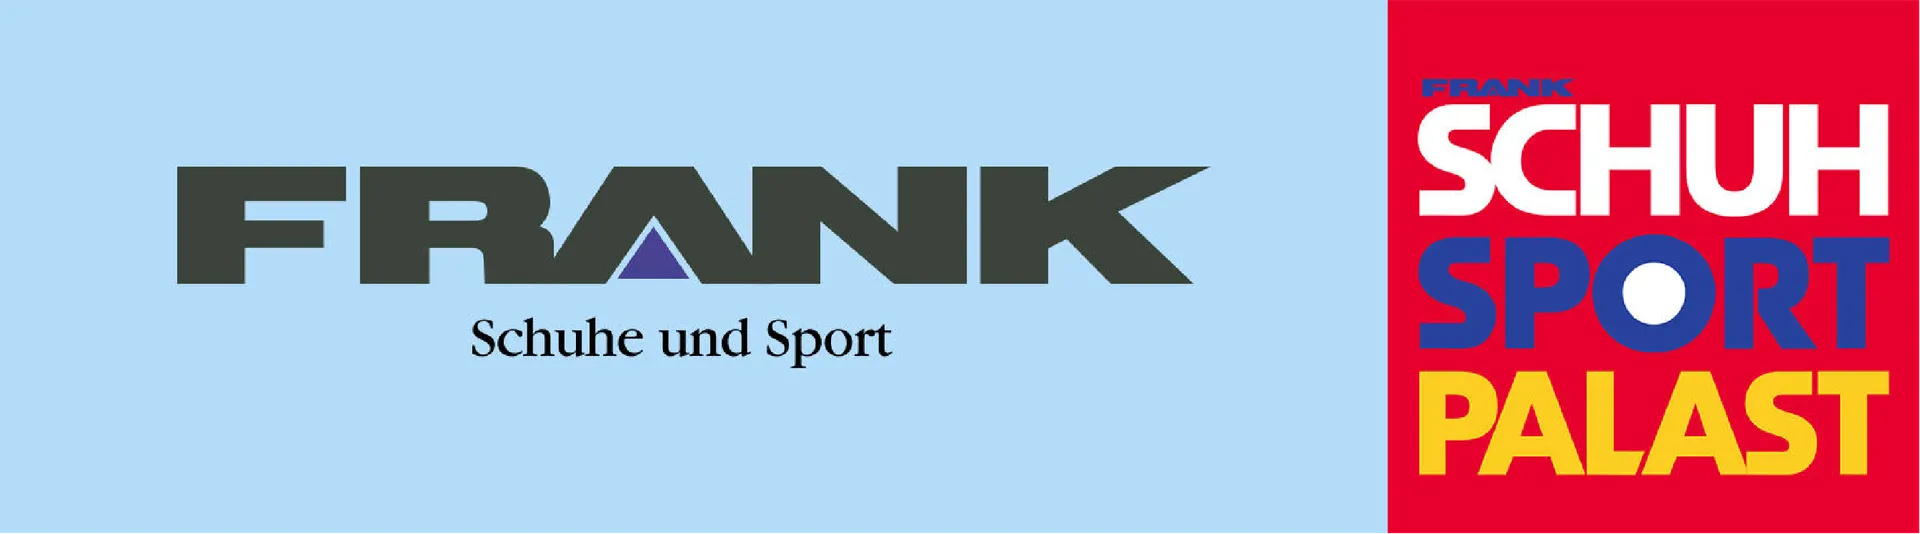 SCHUH FRANK logo